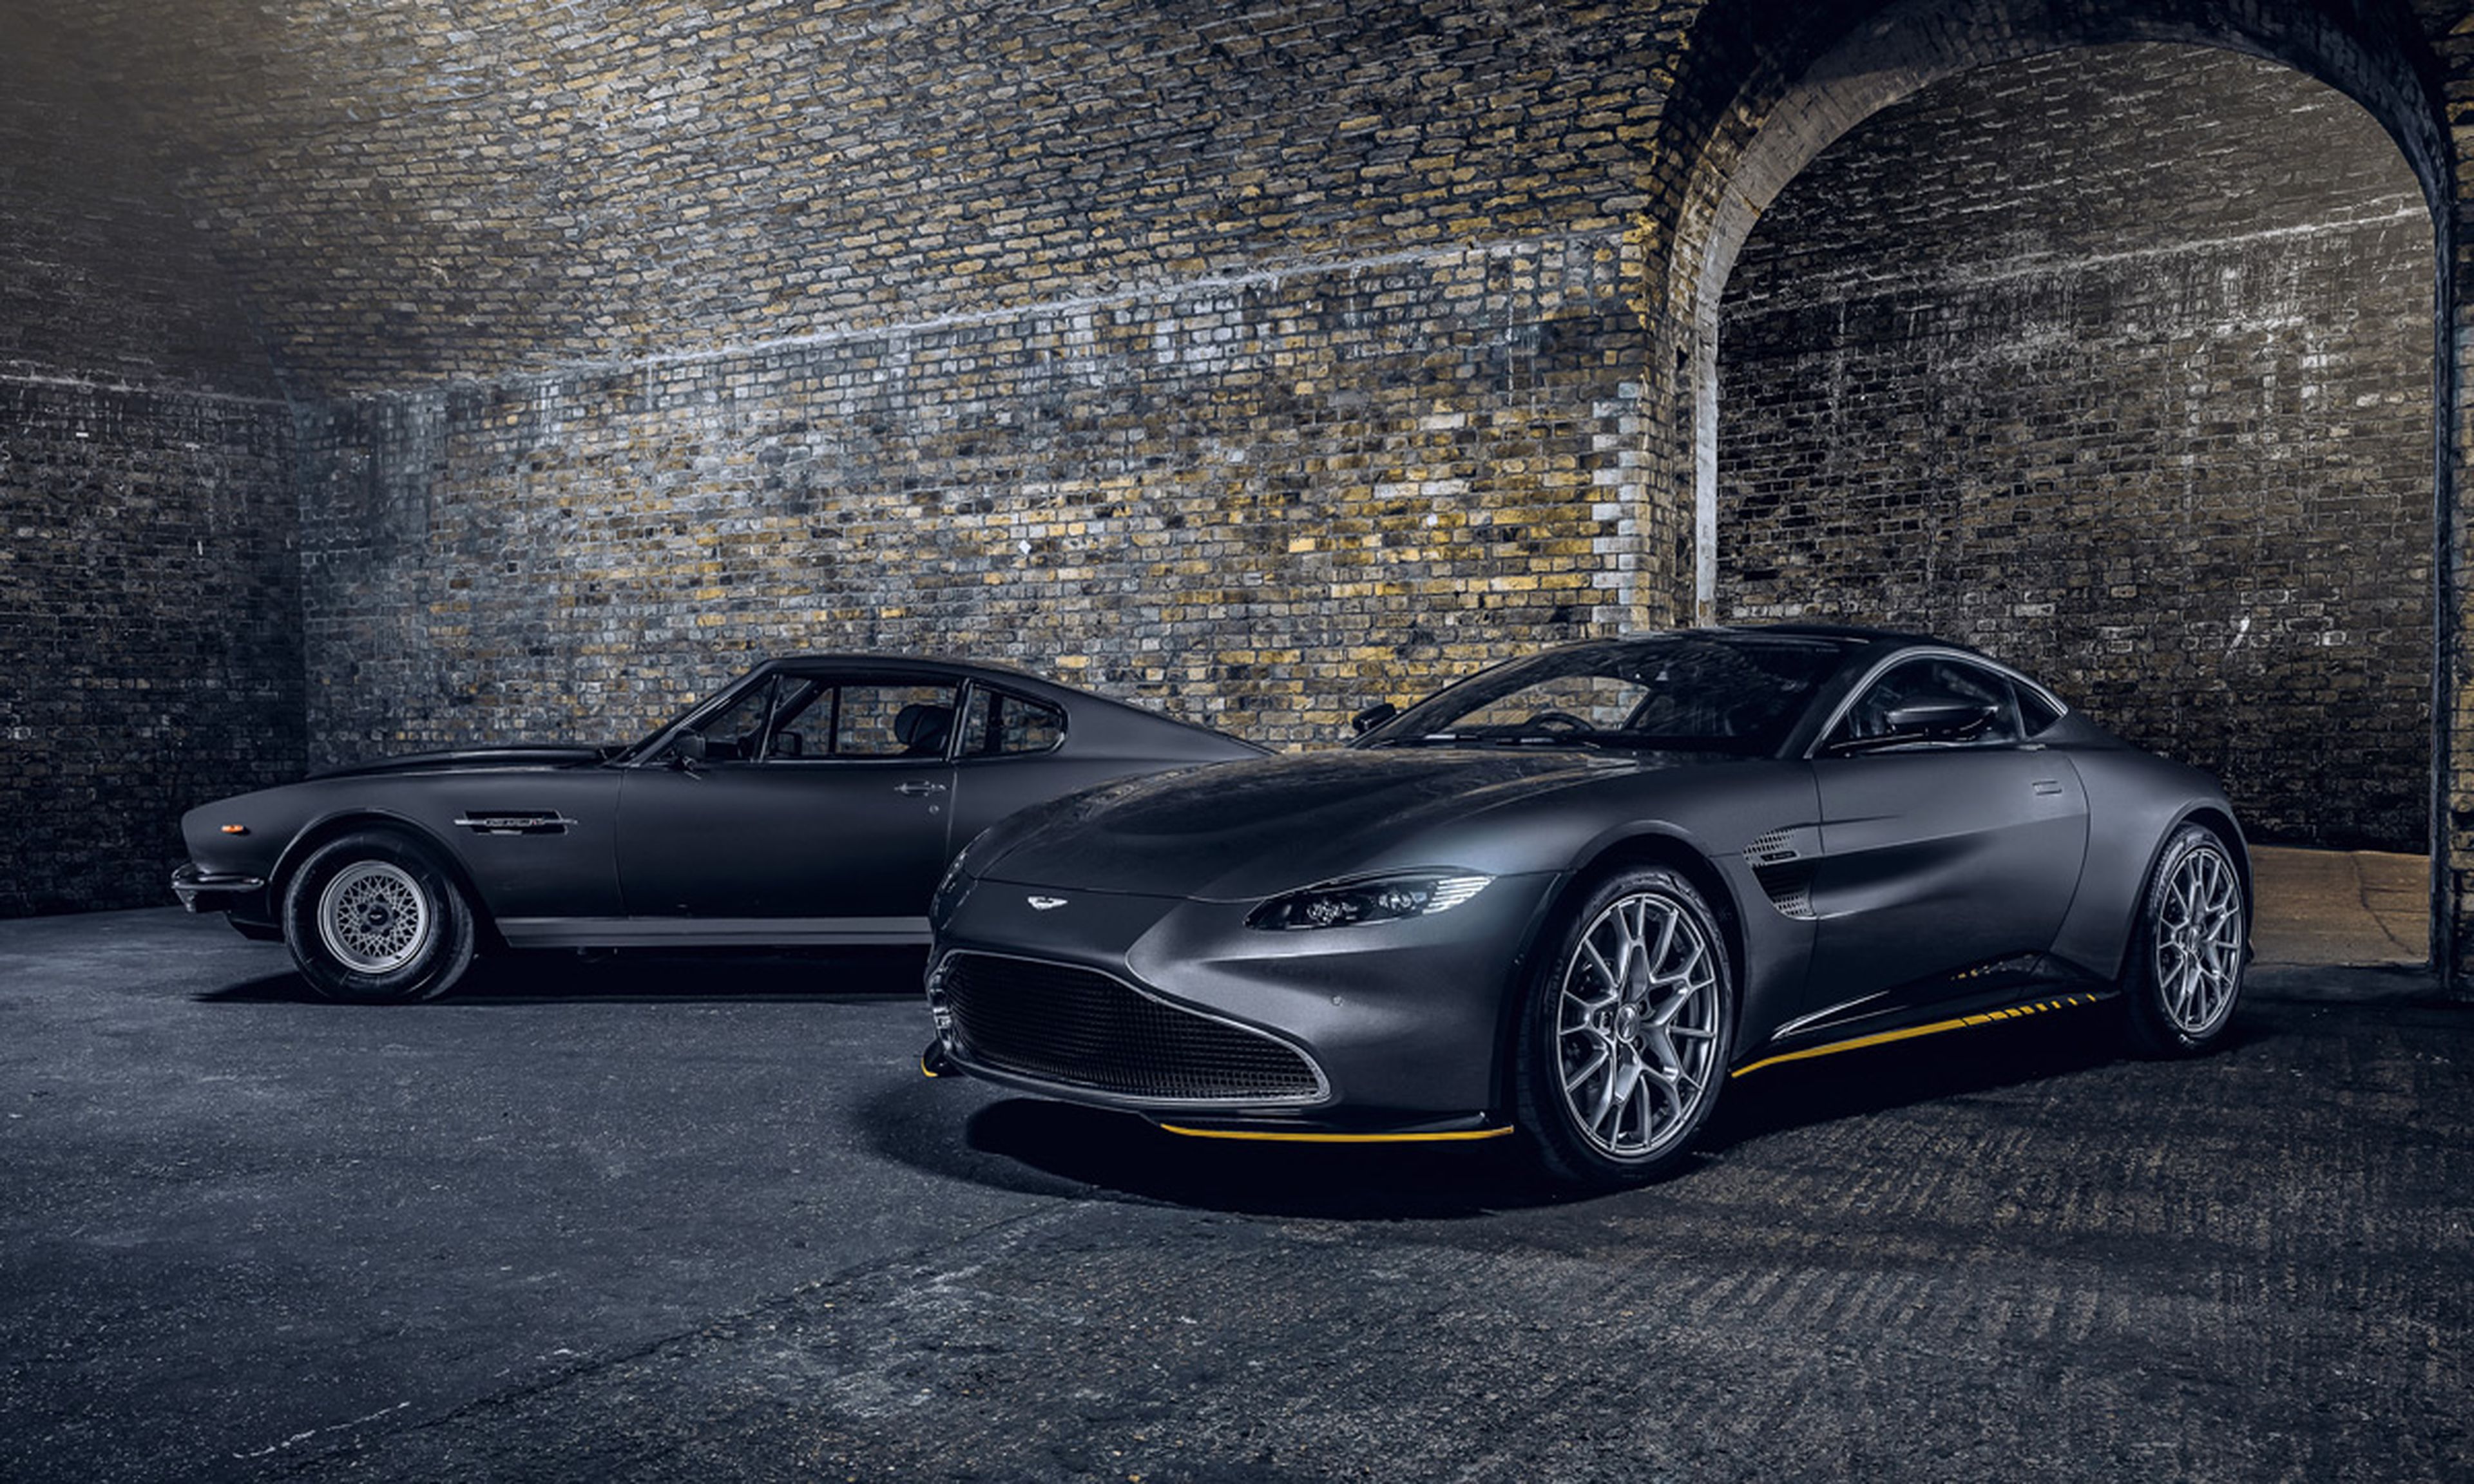 Aston Martin lo tiene fácil: sus coches ya son lujo extremo